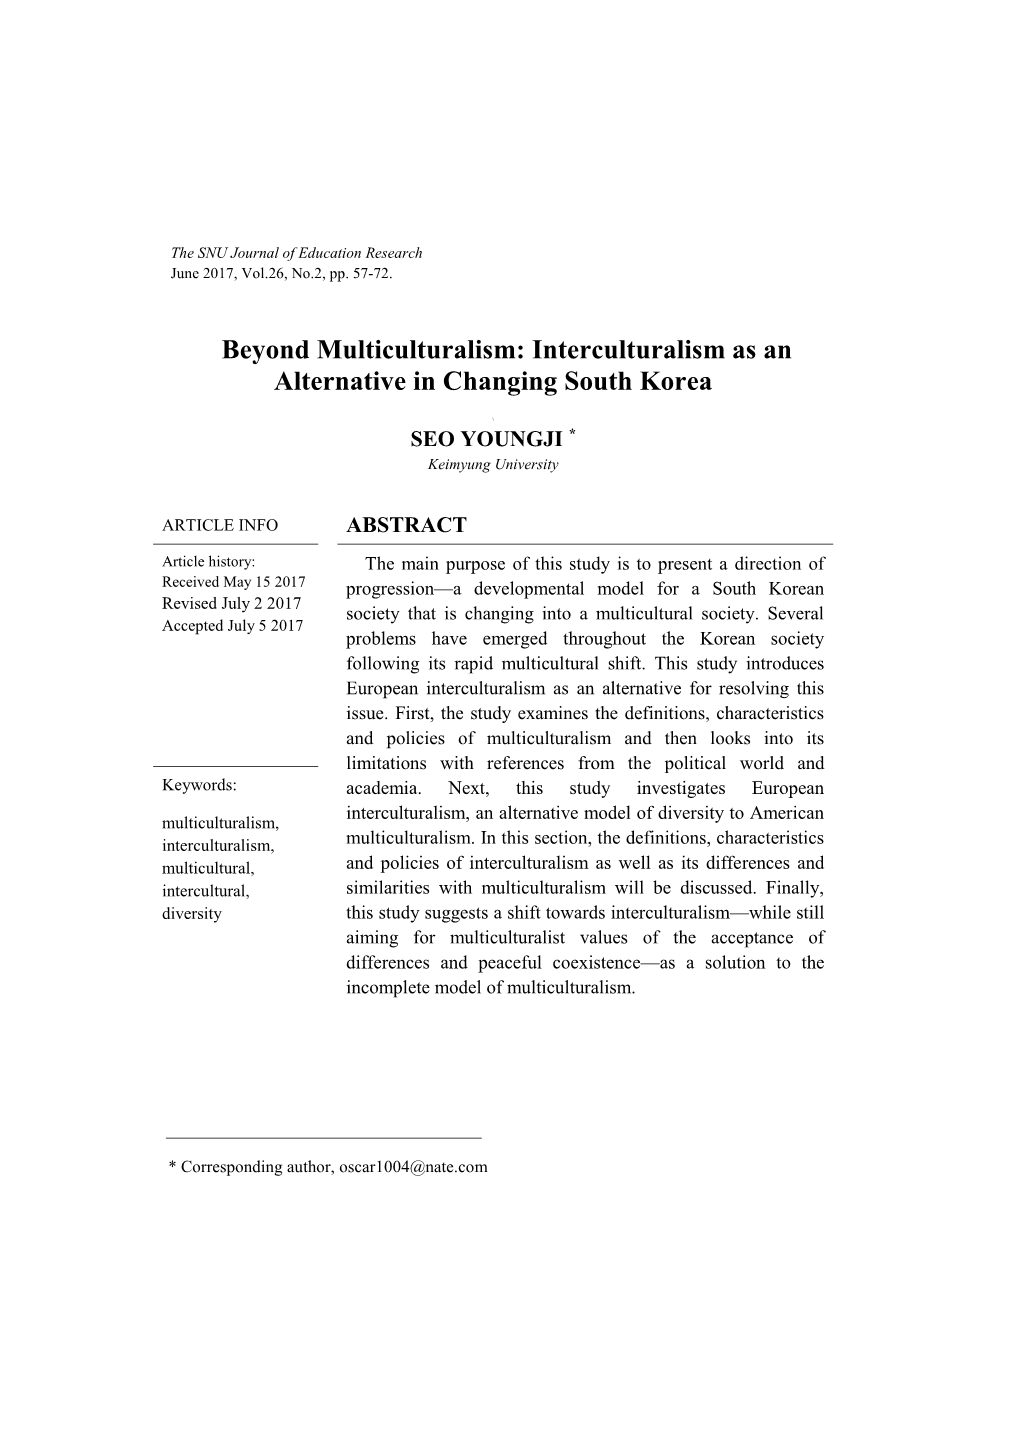 Interculturalism As an Alternative in Changing South Korea